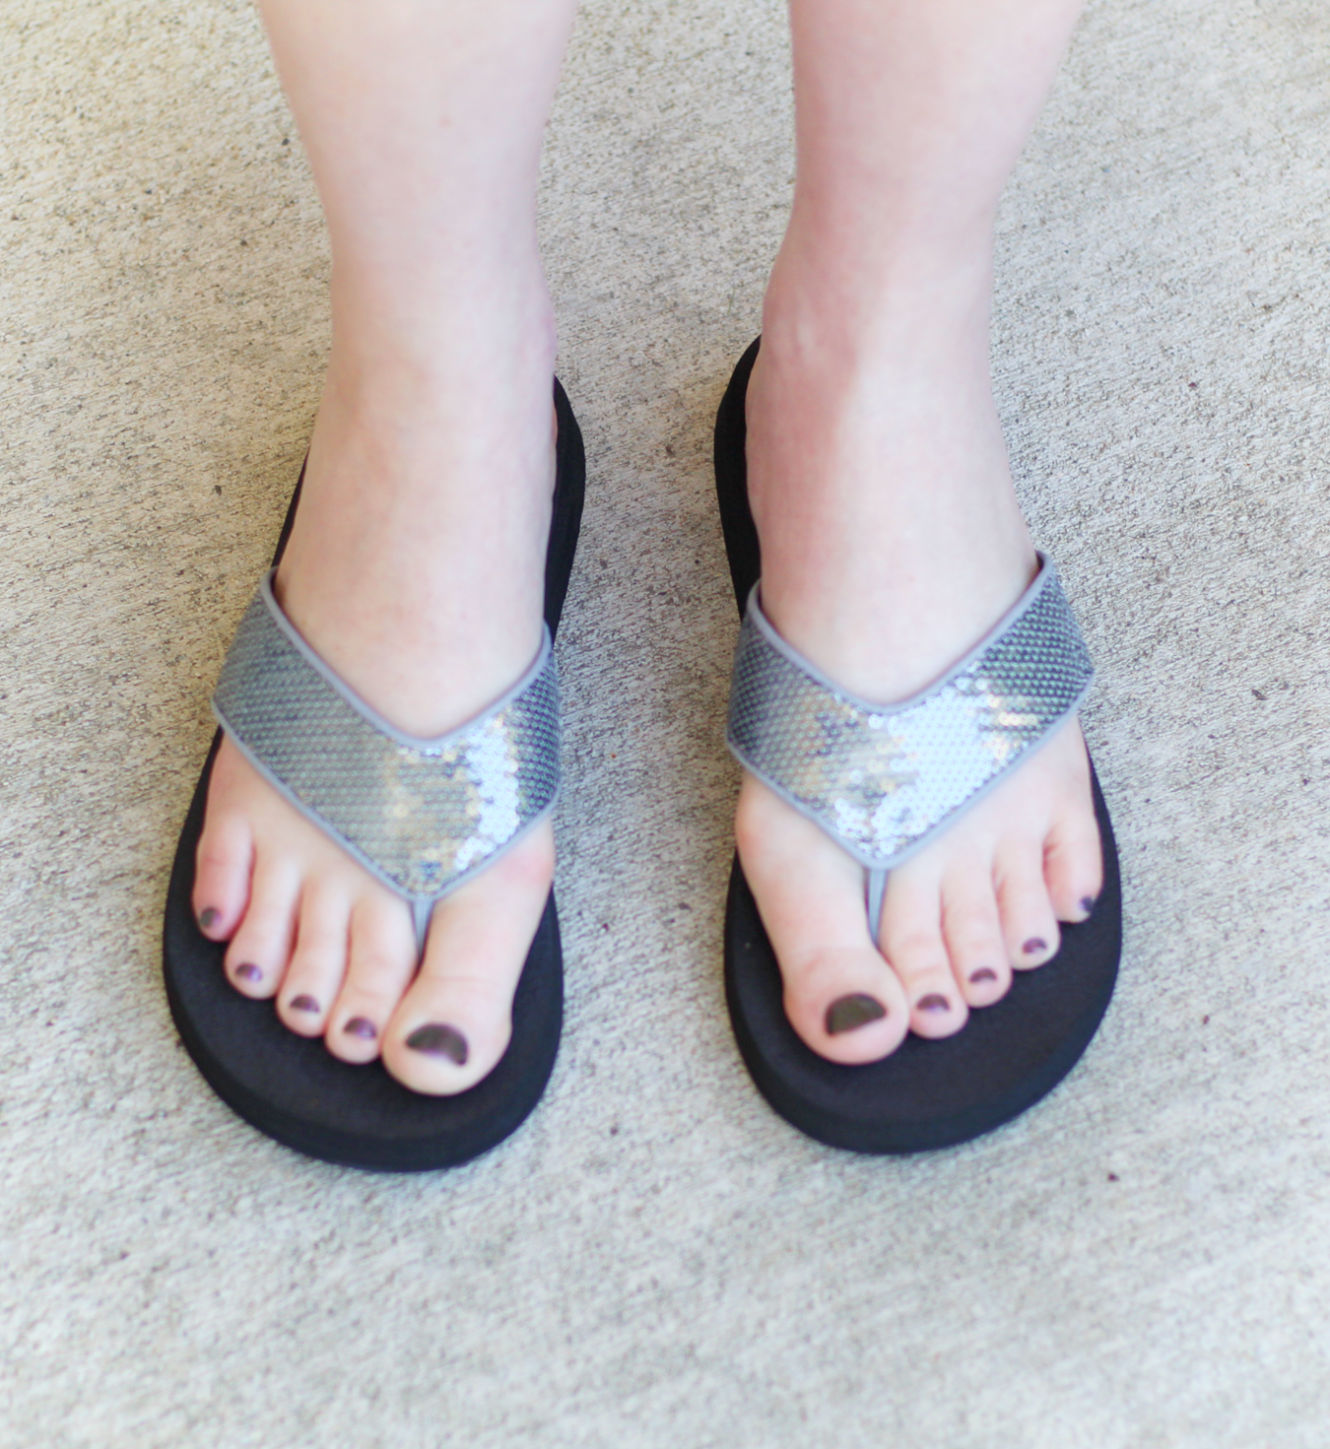 Summere Sandals Plus A New Favorite Nail Polish #beauty #fashion